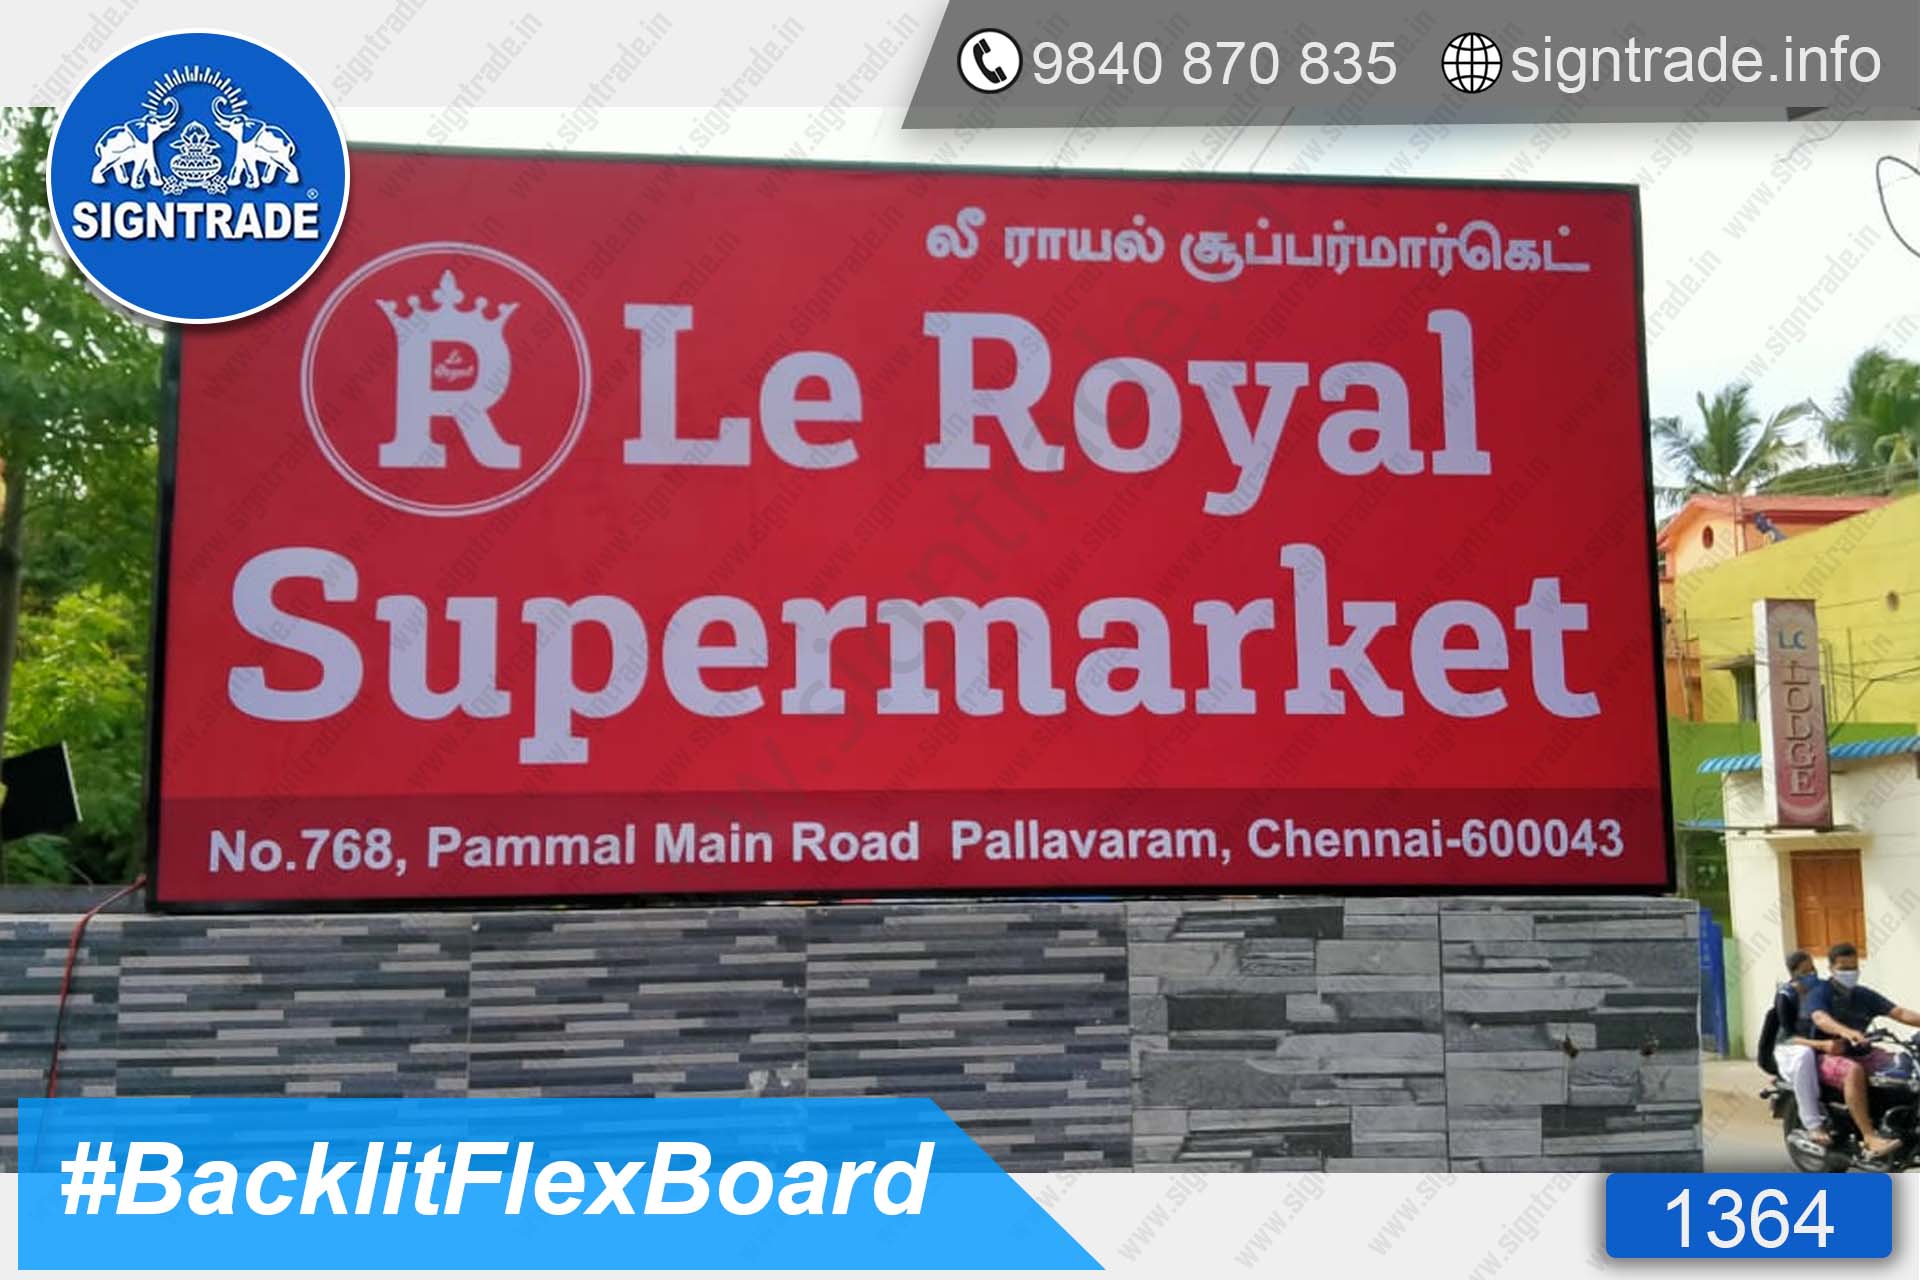 Le Royal Supermarket - Pallavaram - Chennai - SIGNTRADE - Backlit Flex Board Manufacturers in Chennai